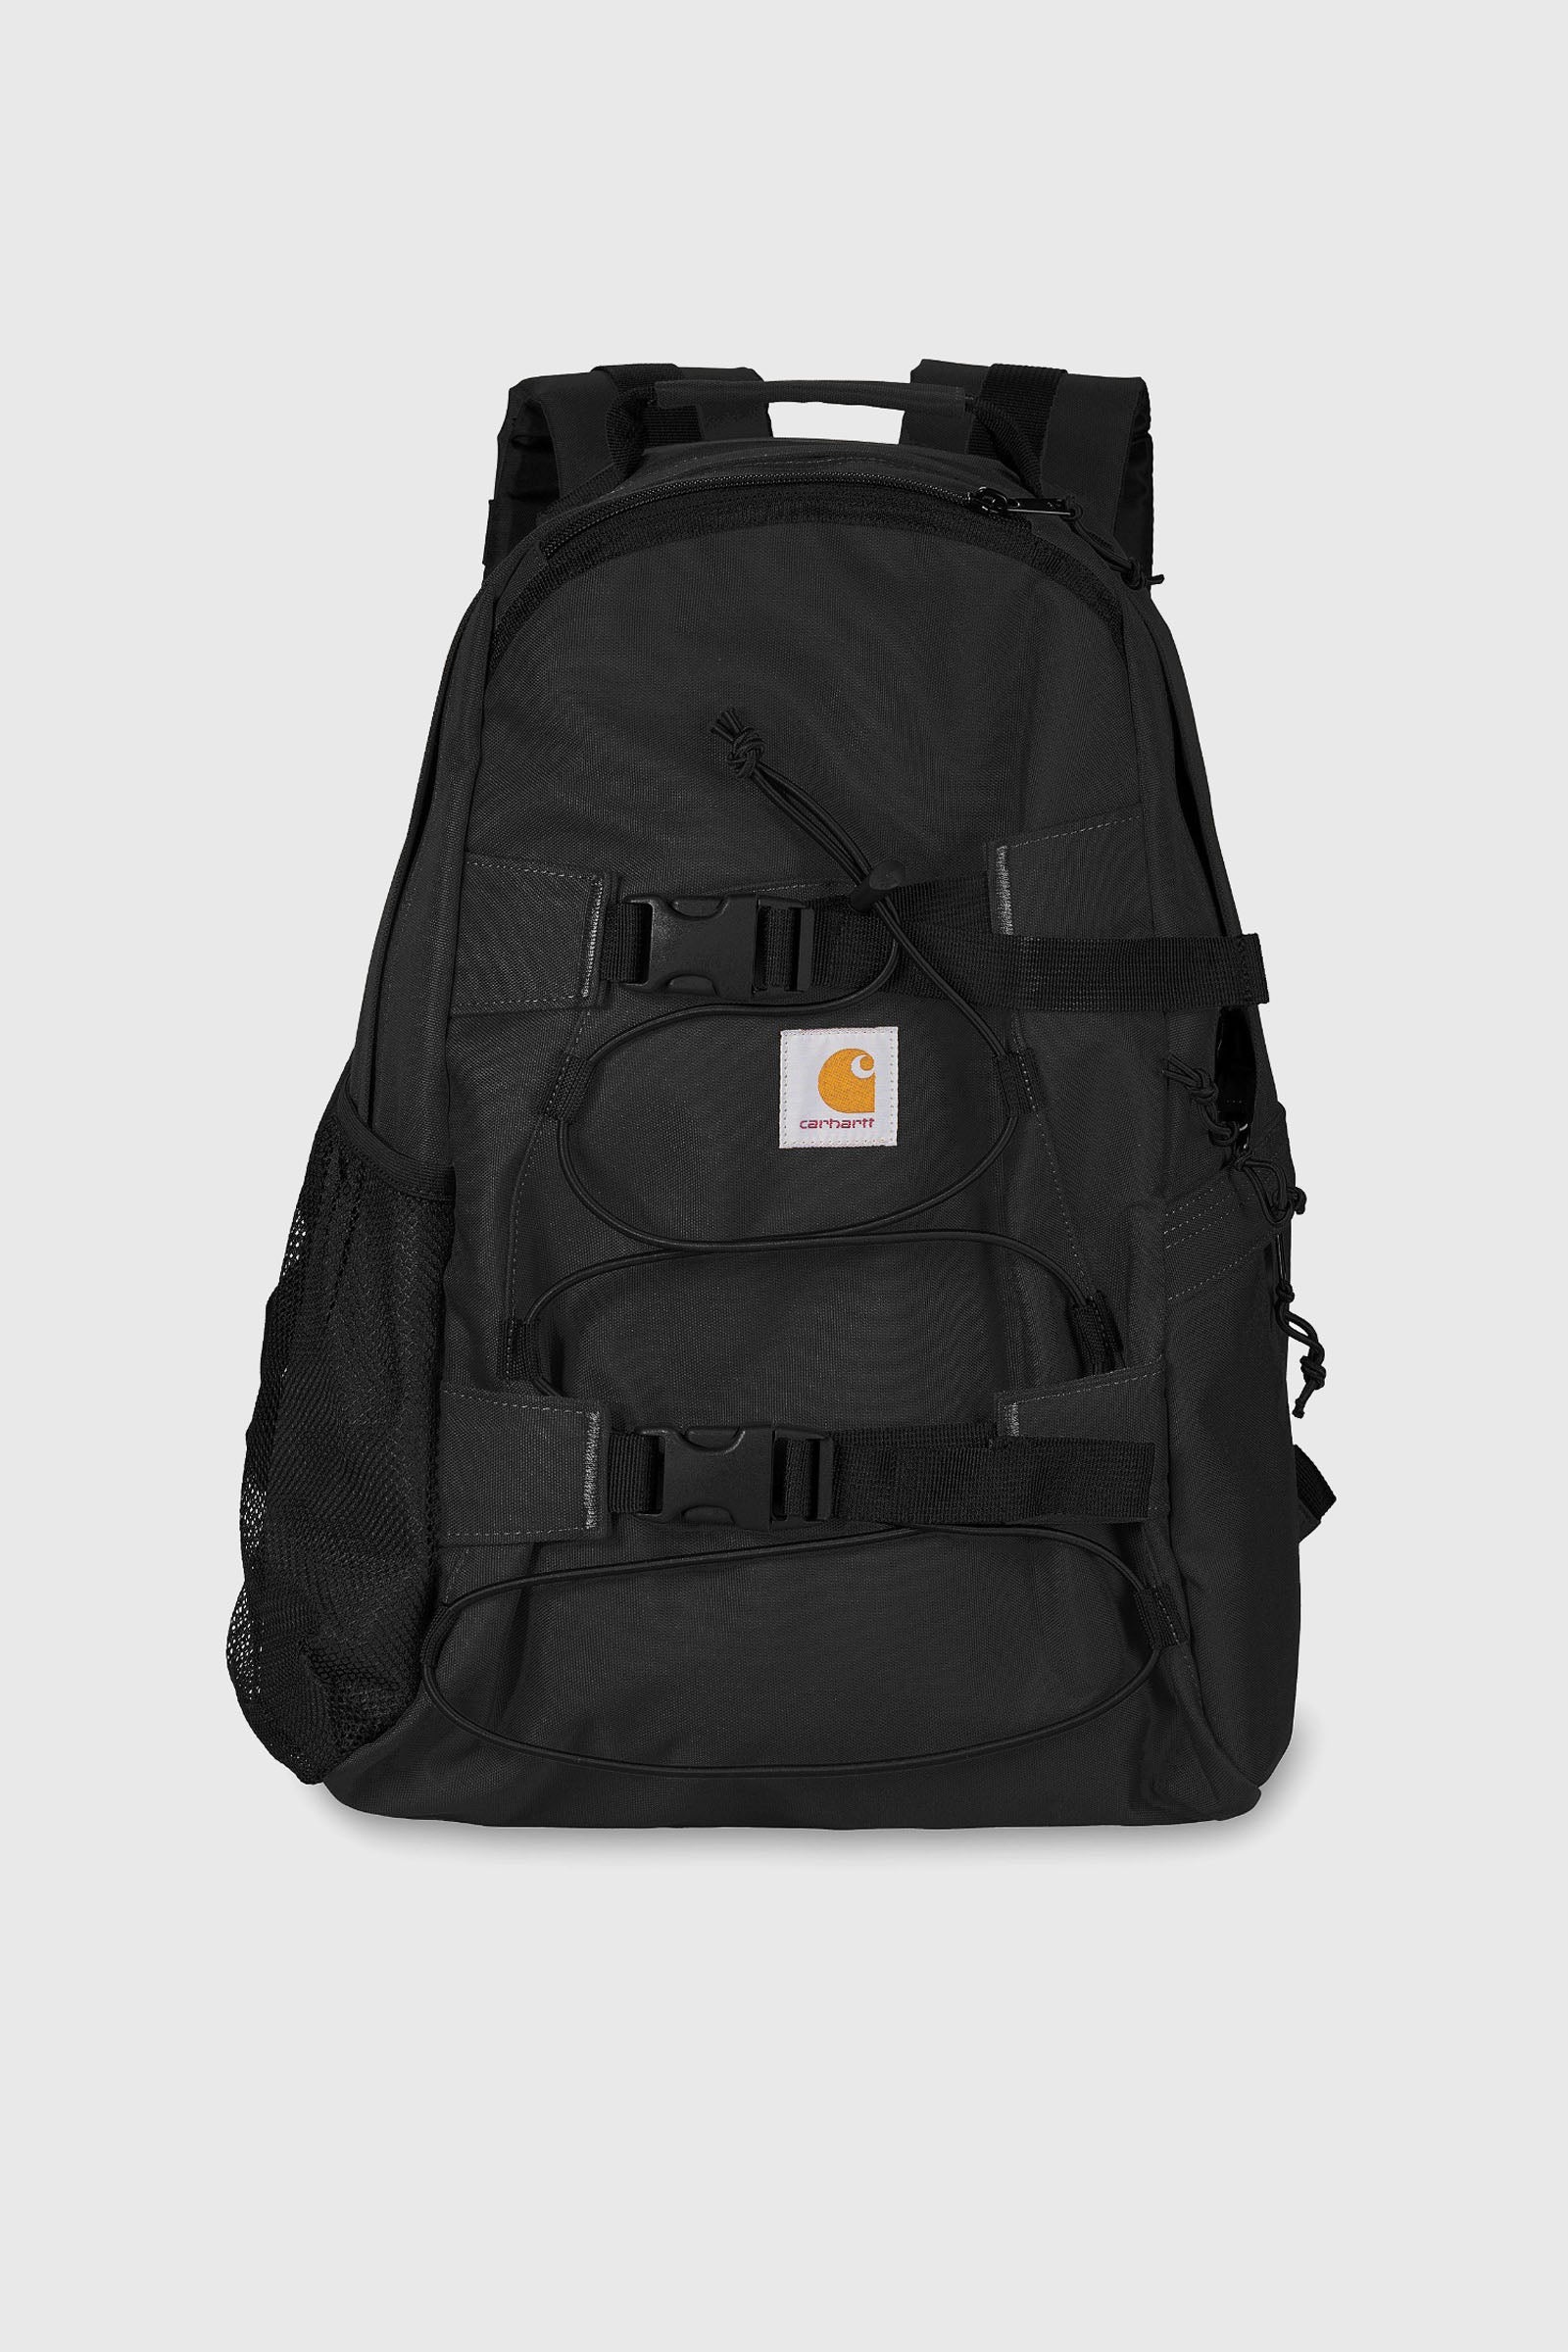 Carhartt Wip Kickflip Backpack Nero Unisex - 1